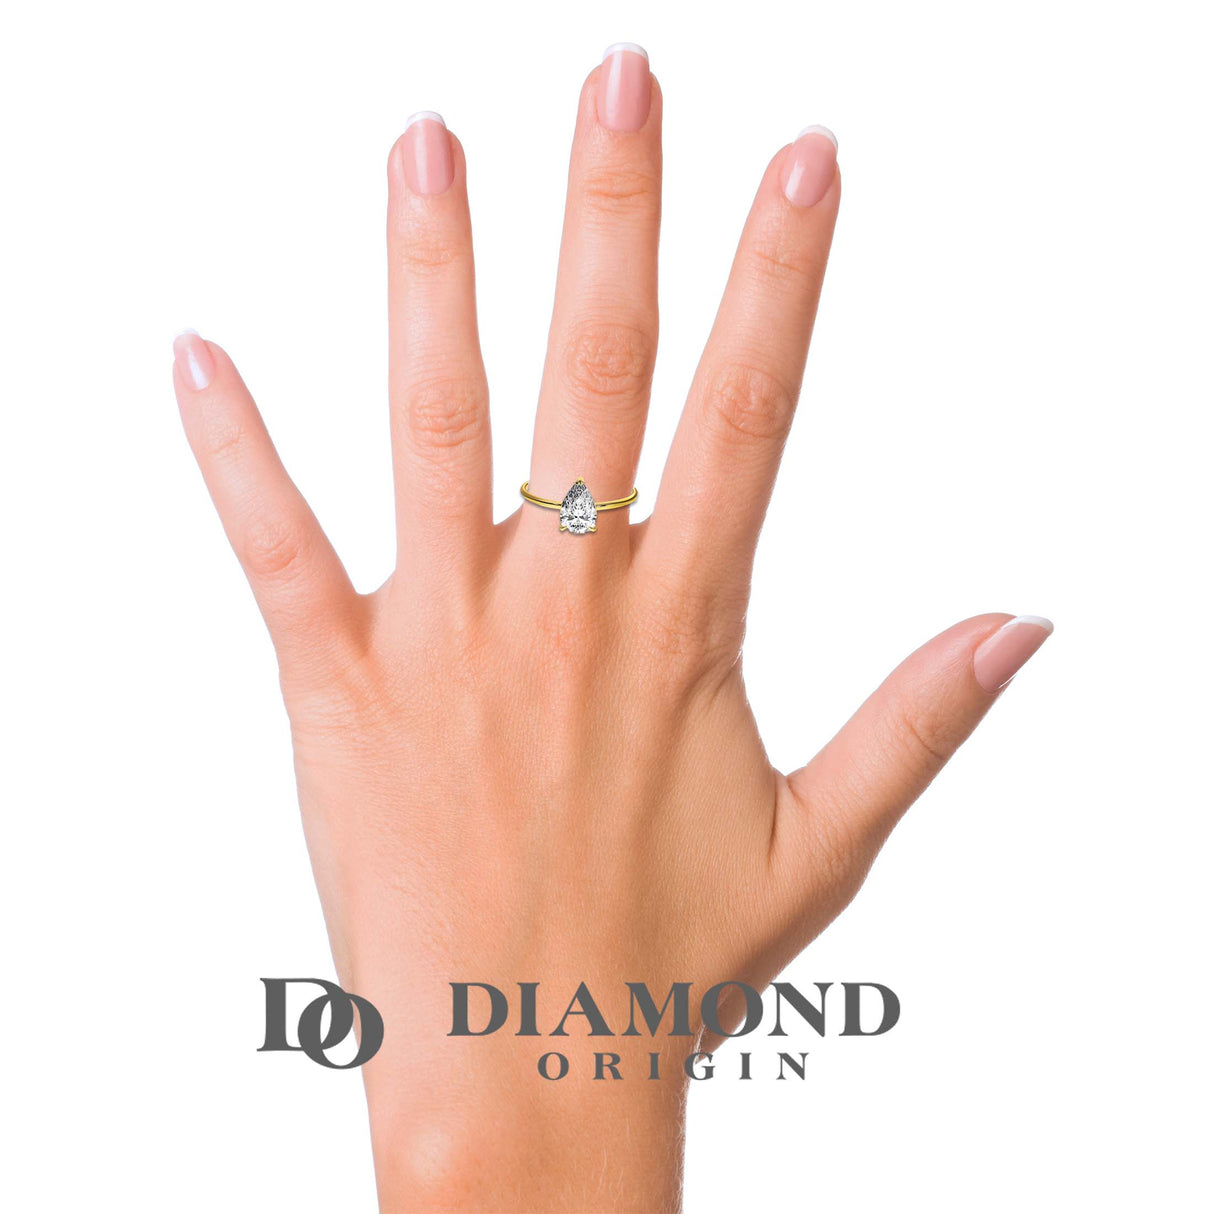 2 Ct Pear Shape Lab Grown Diamond Ring 14K Fine Gold Solitaire Promise Engagement IGI Certificate